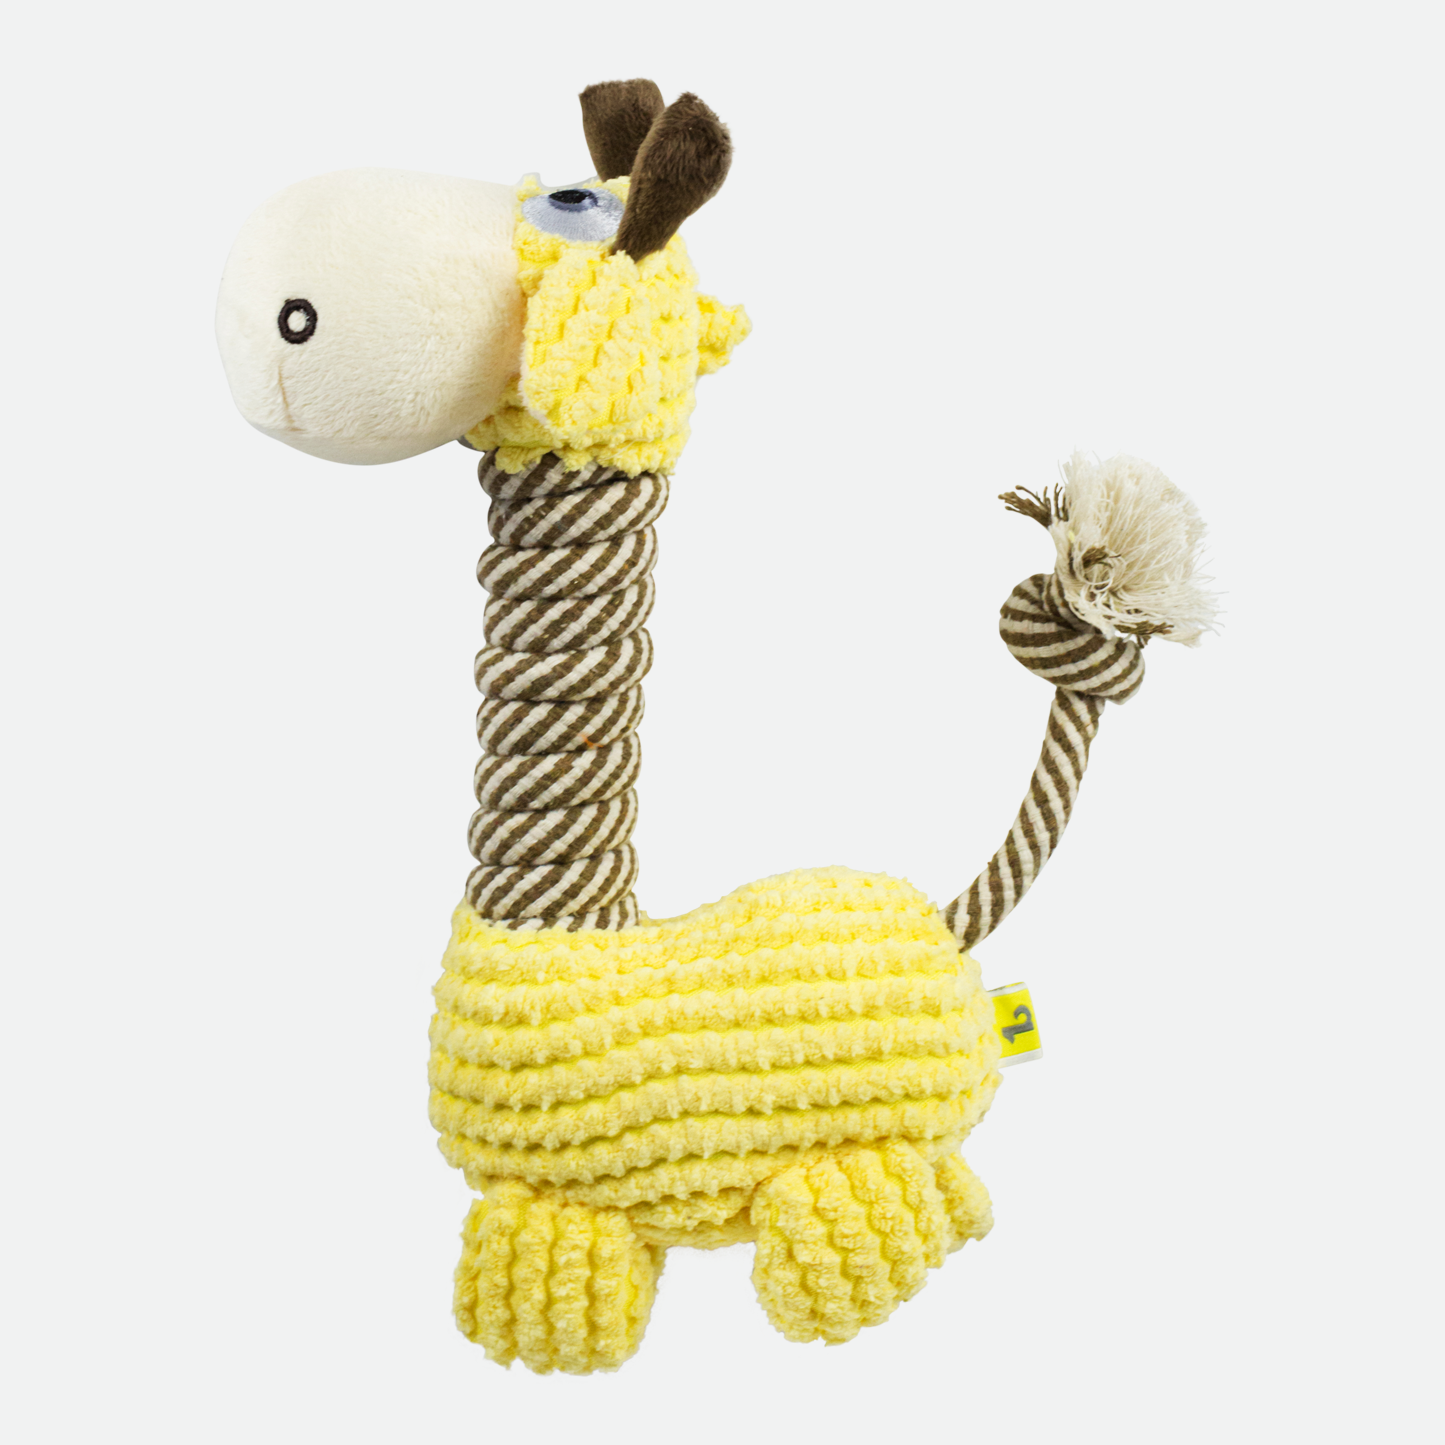 Plush toy for dog, giraffe style